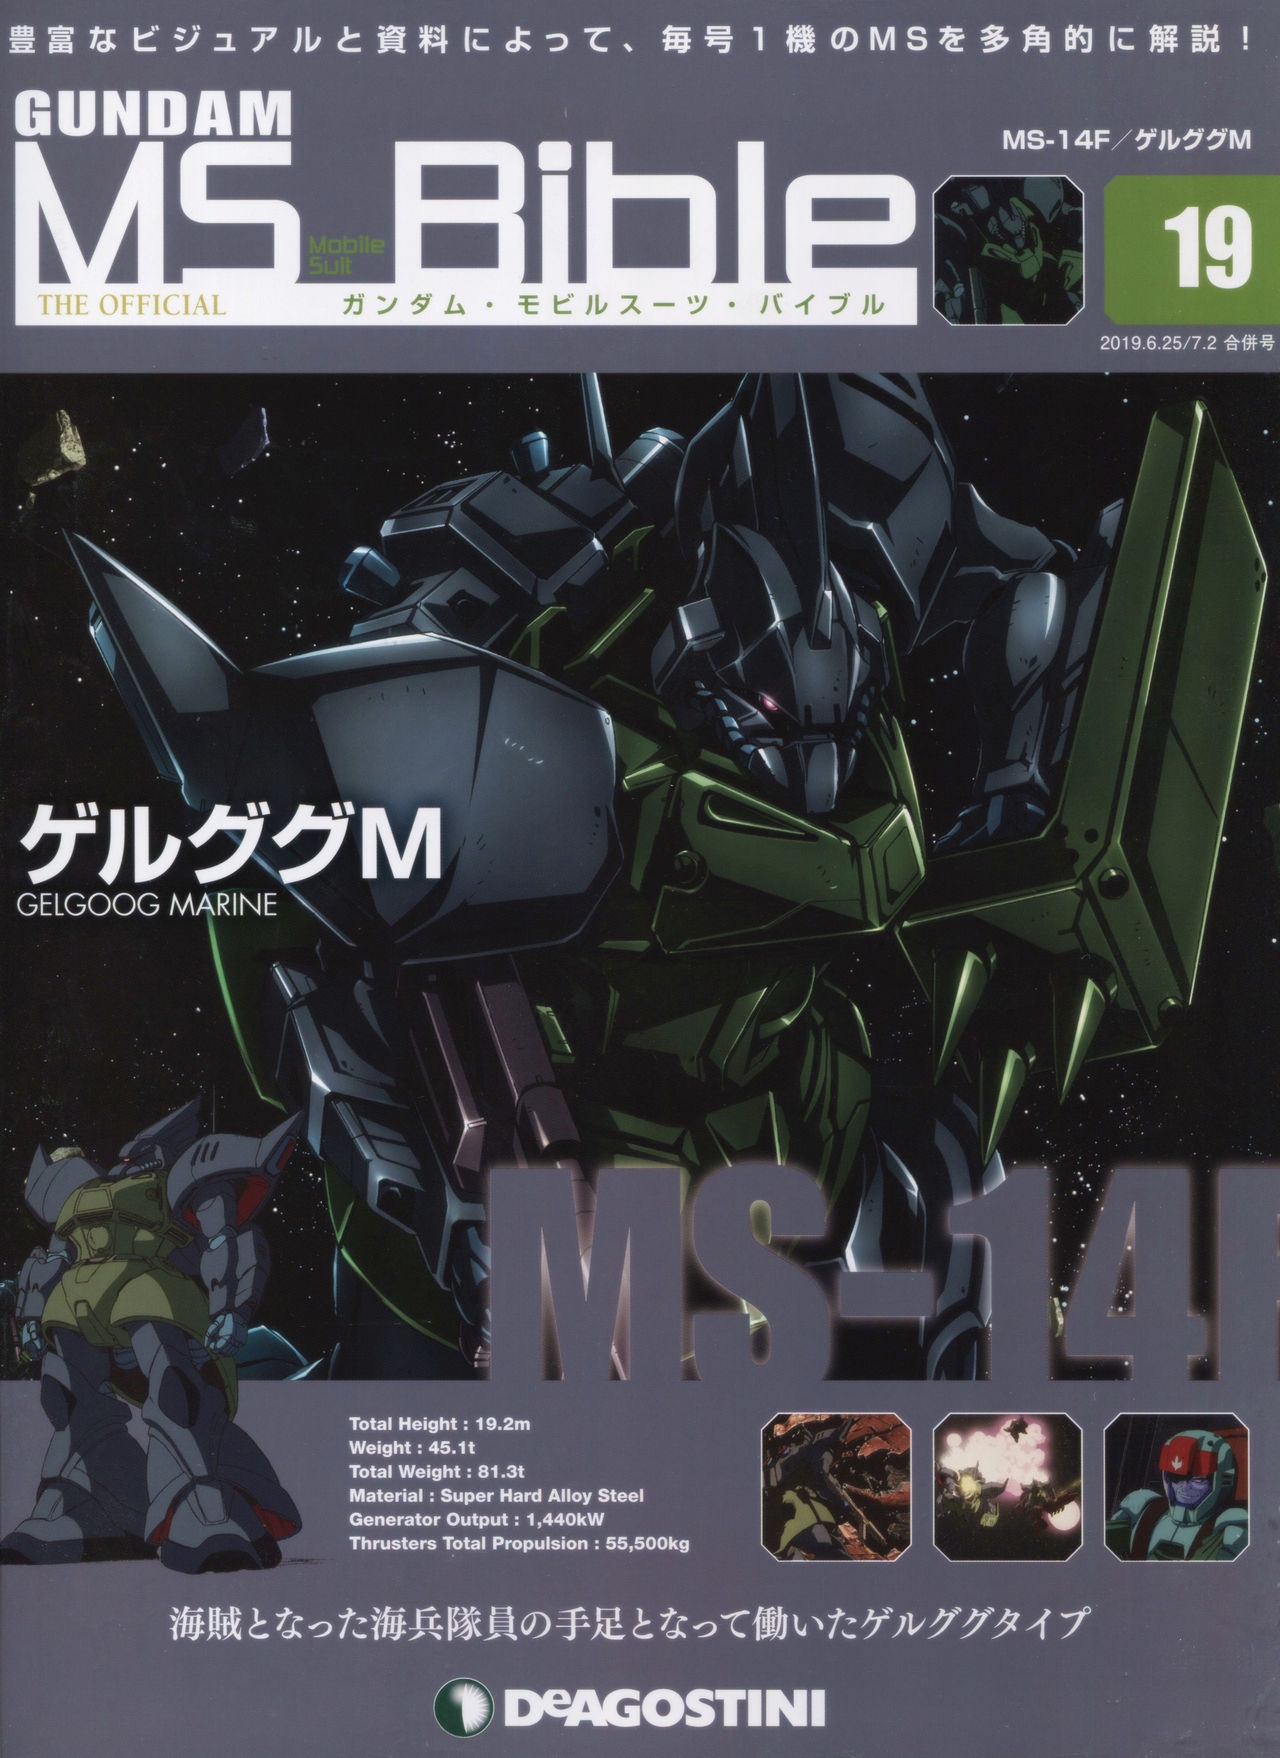 Gundam Mobile Suit Bible 19 0